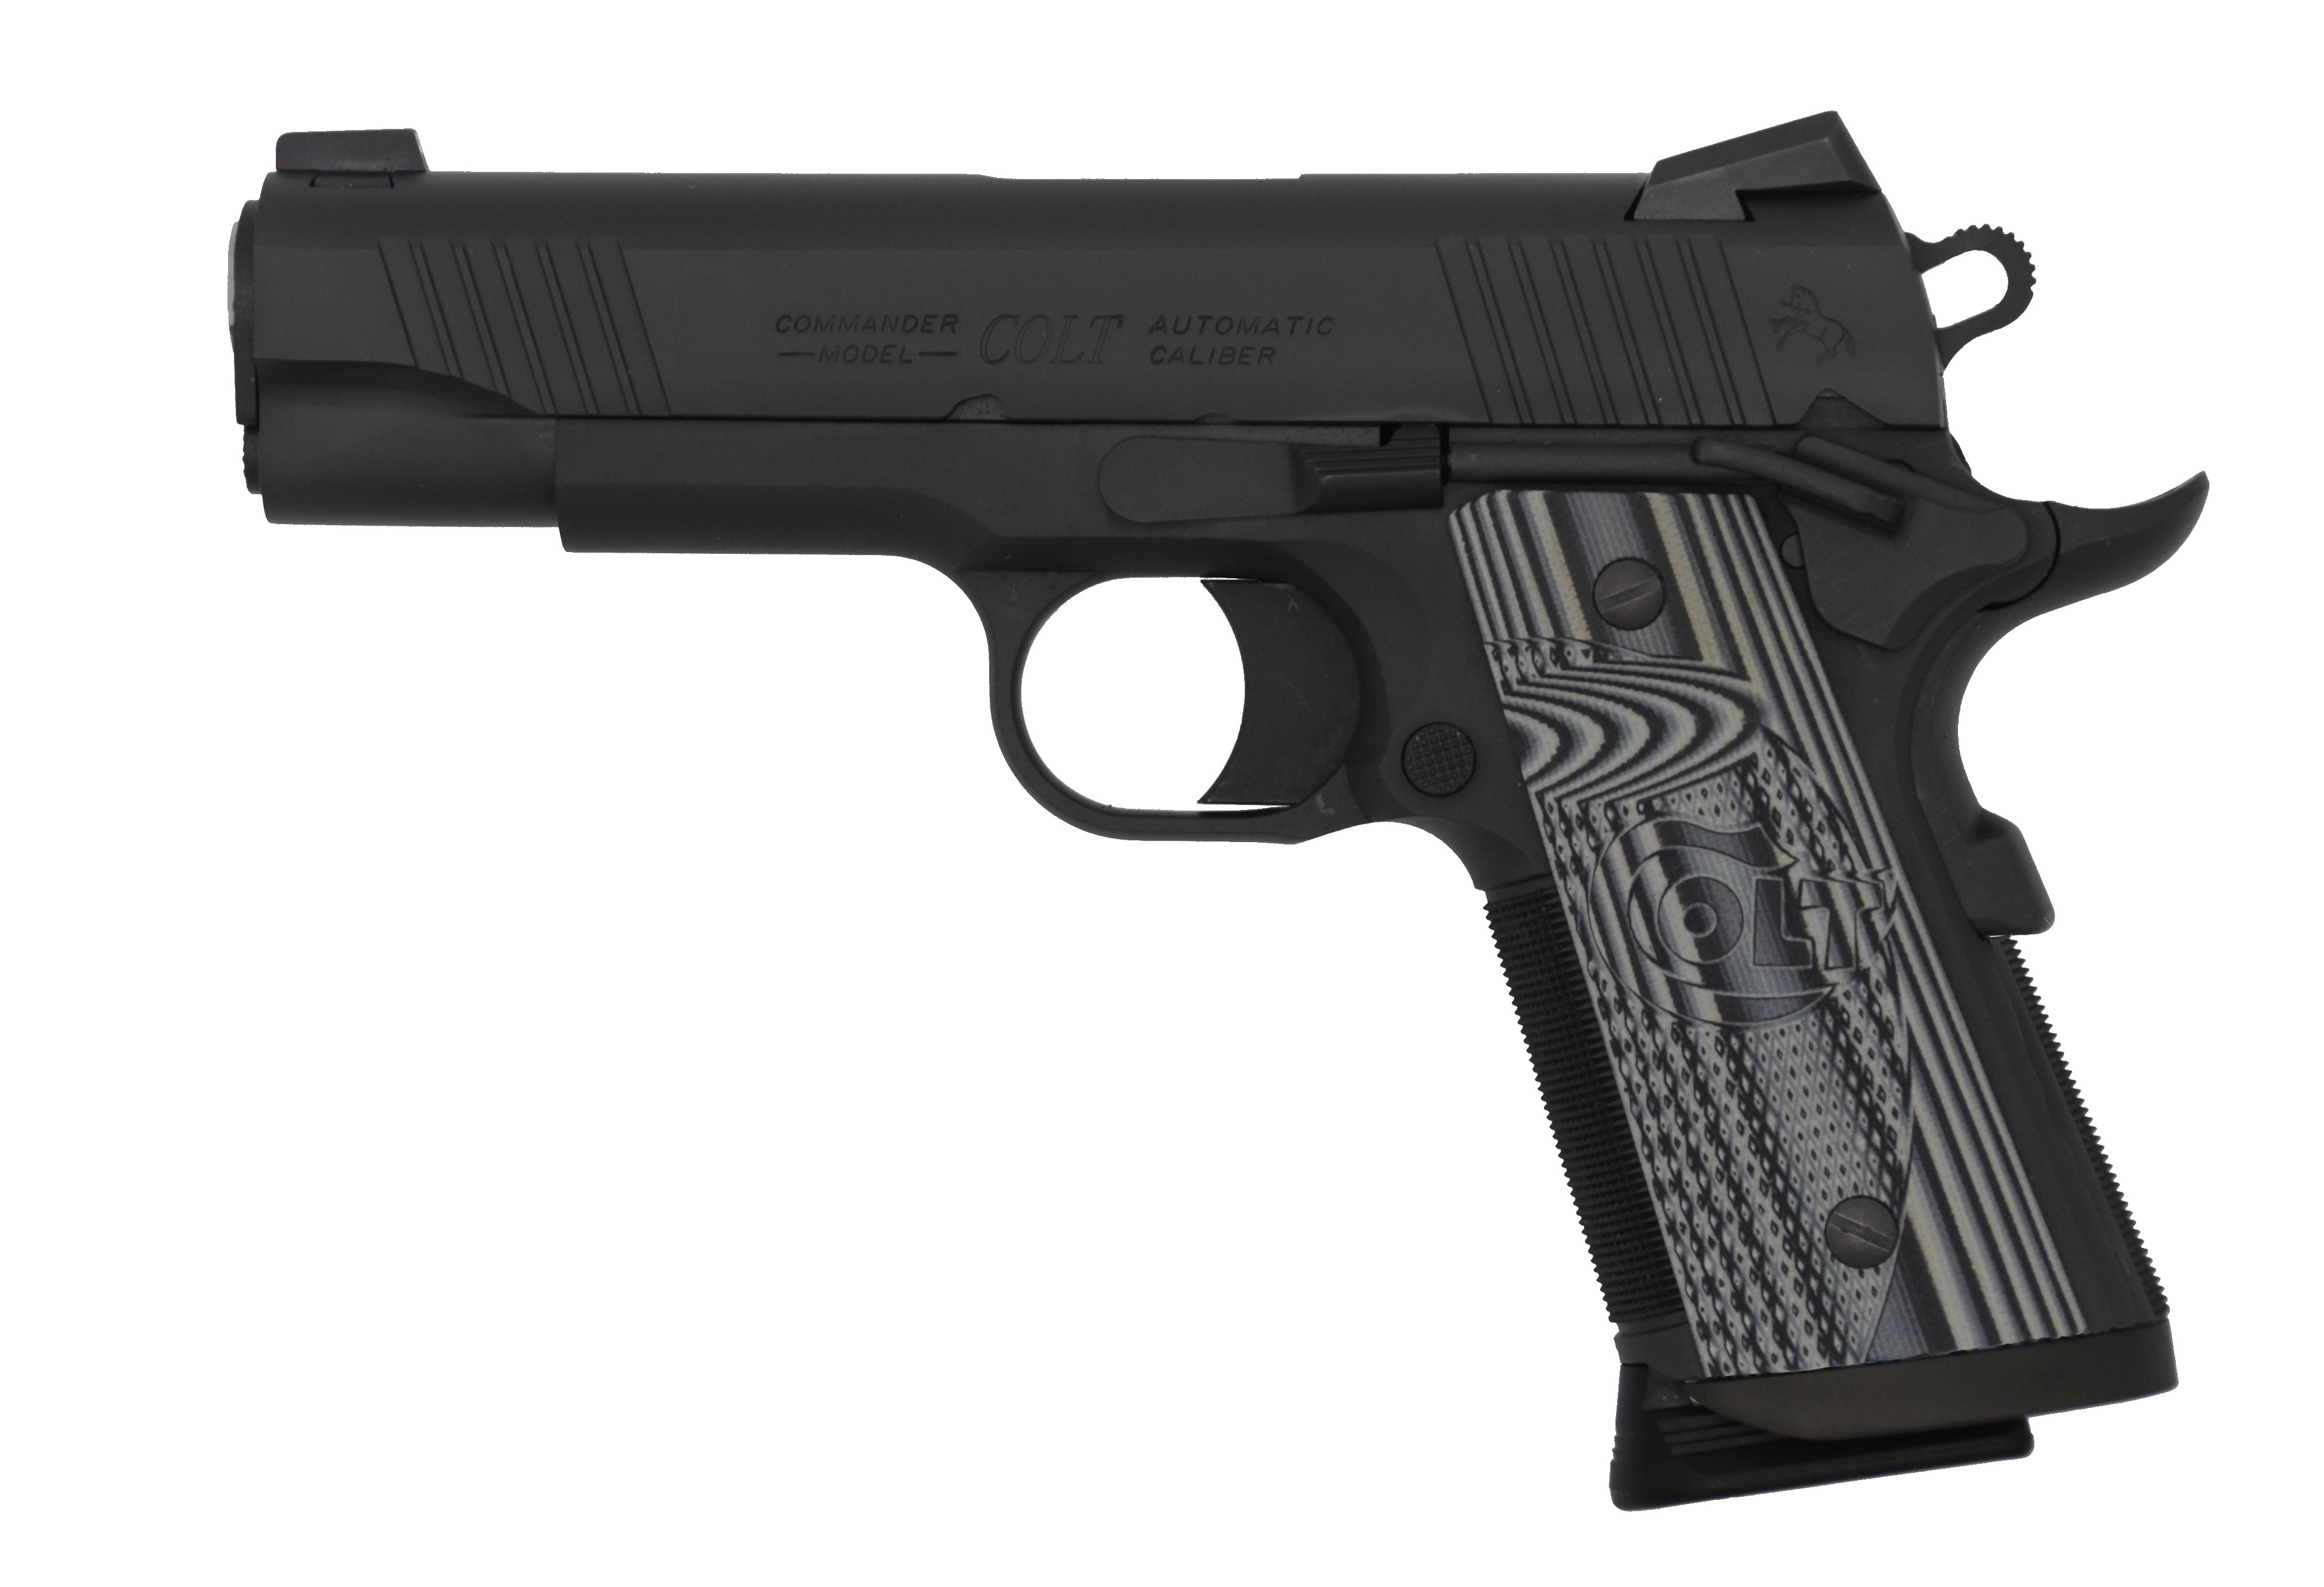 CLT CCUC 45ACP 4.25 BLK/GRY 7 - Handguns